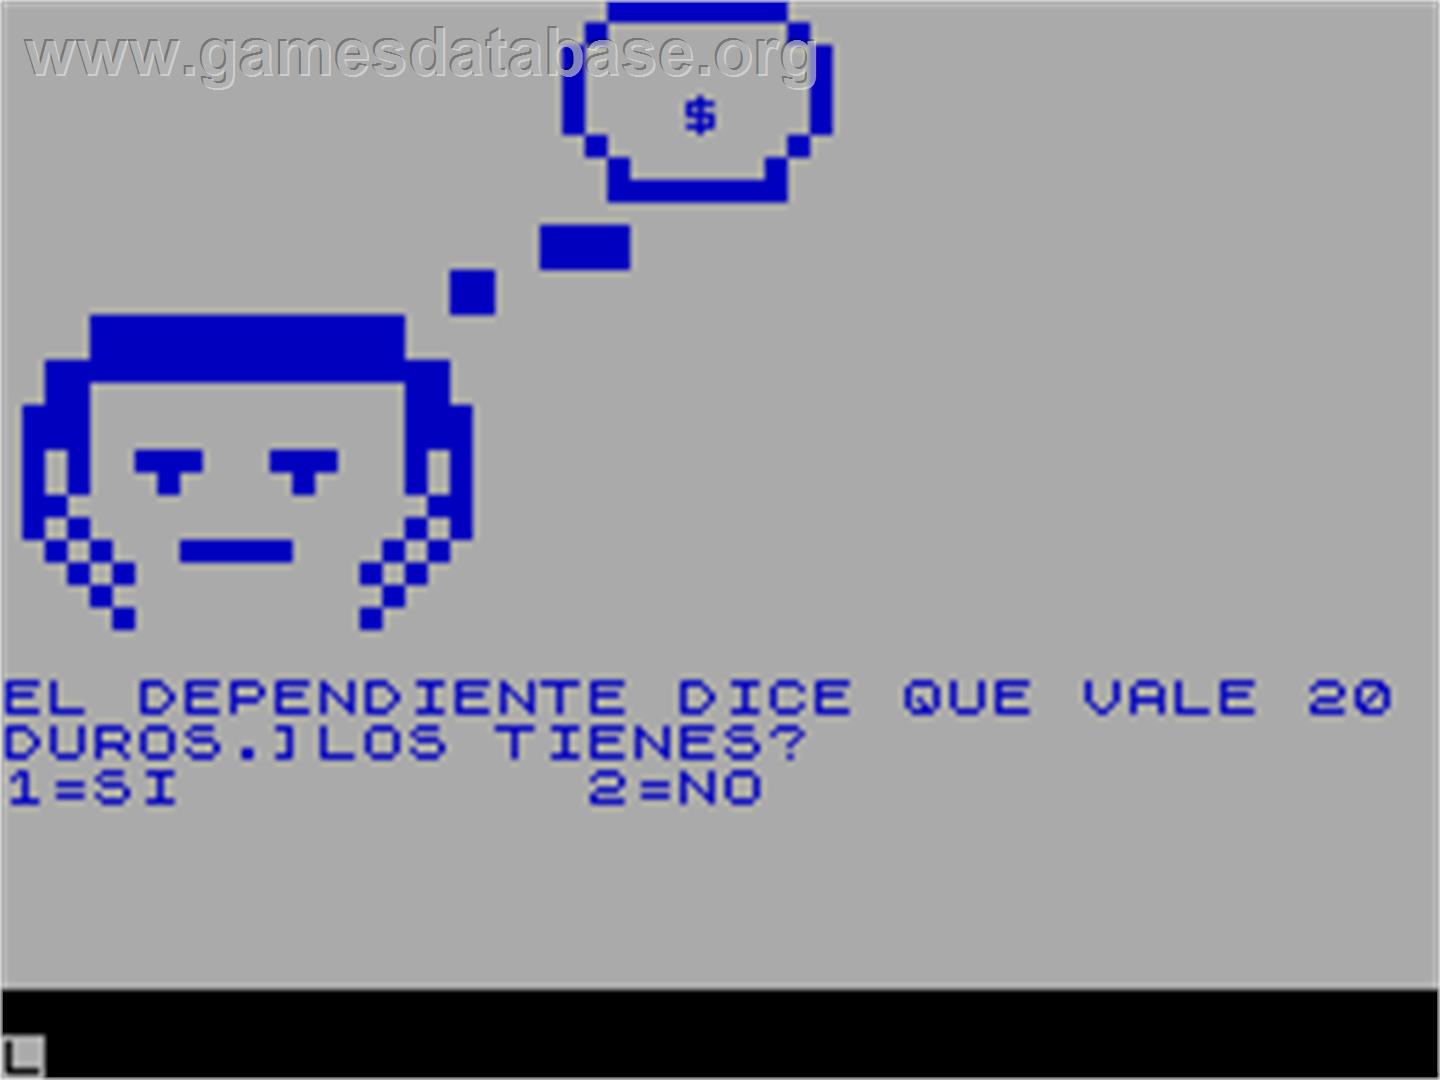 13 Rue del Percebe - Sinclair ZX Spectrum - Artwork - In Game